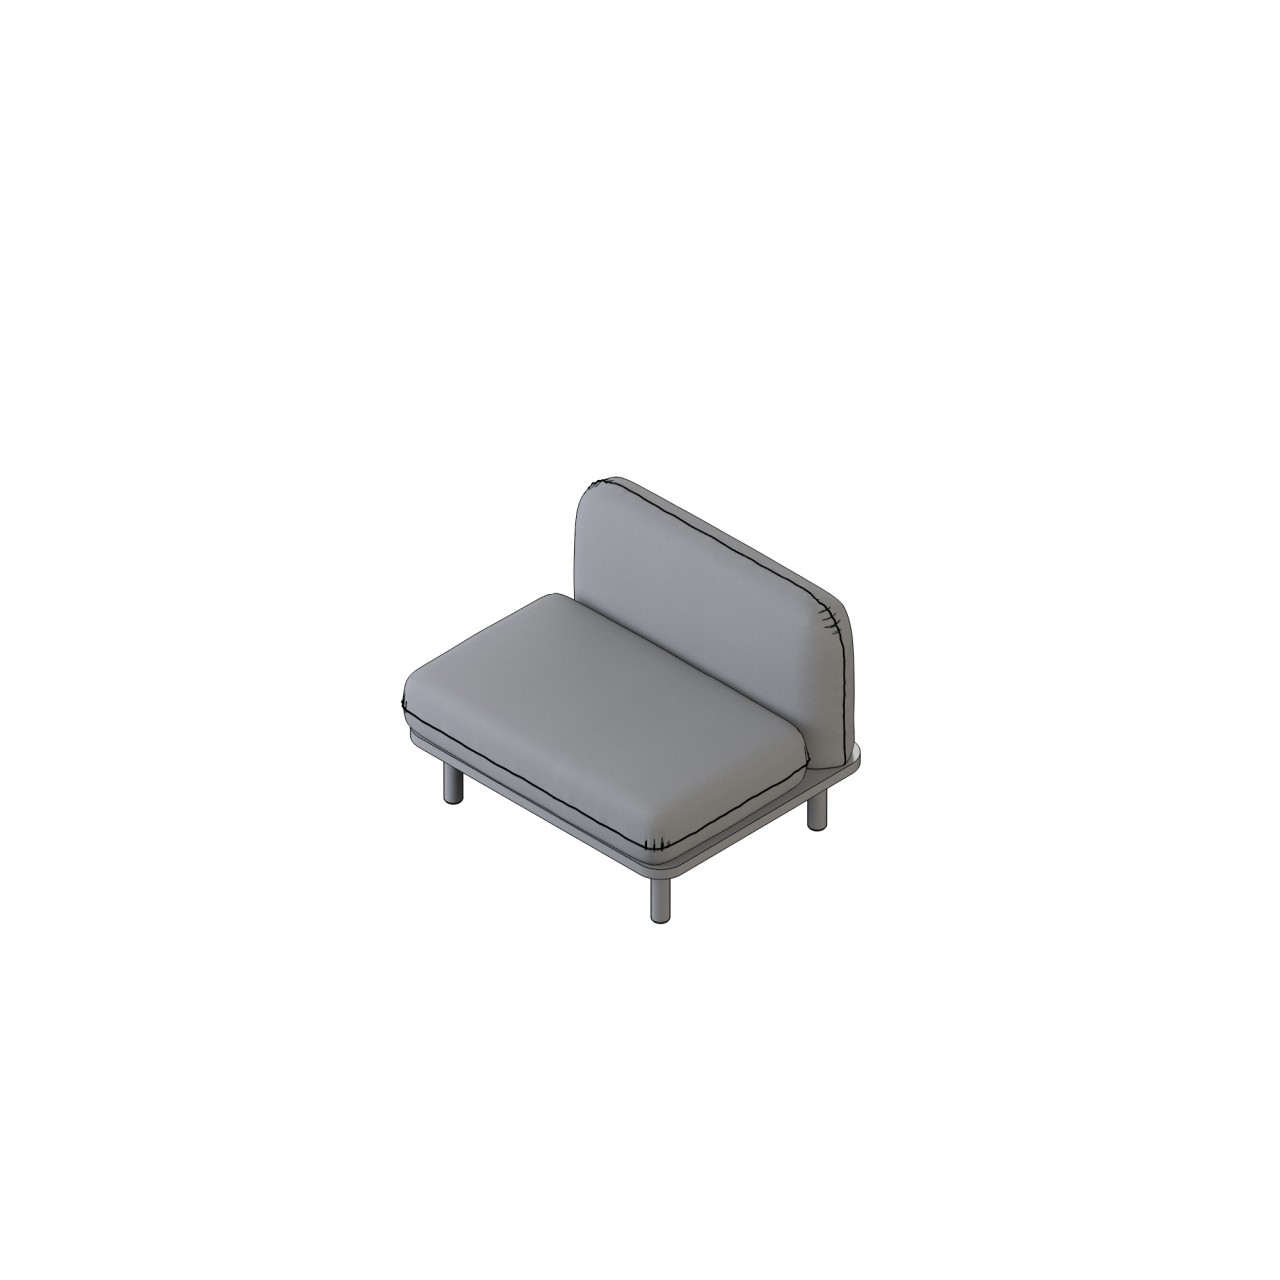 Soft - 24003
COM 5 (back 1.75, base 1, seat 2.75)